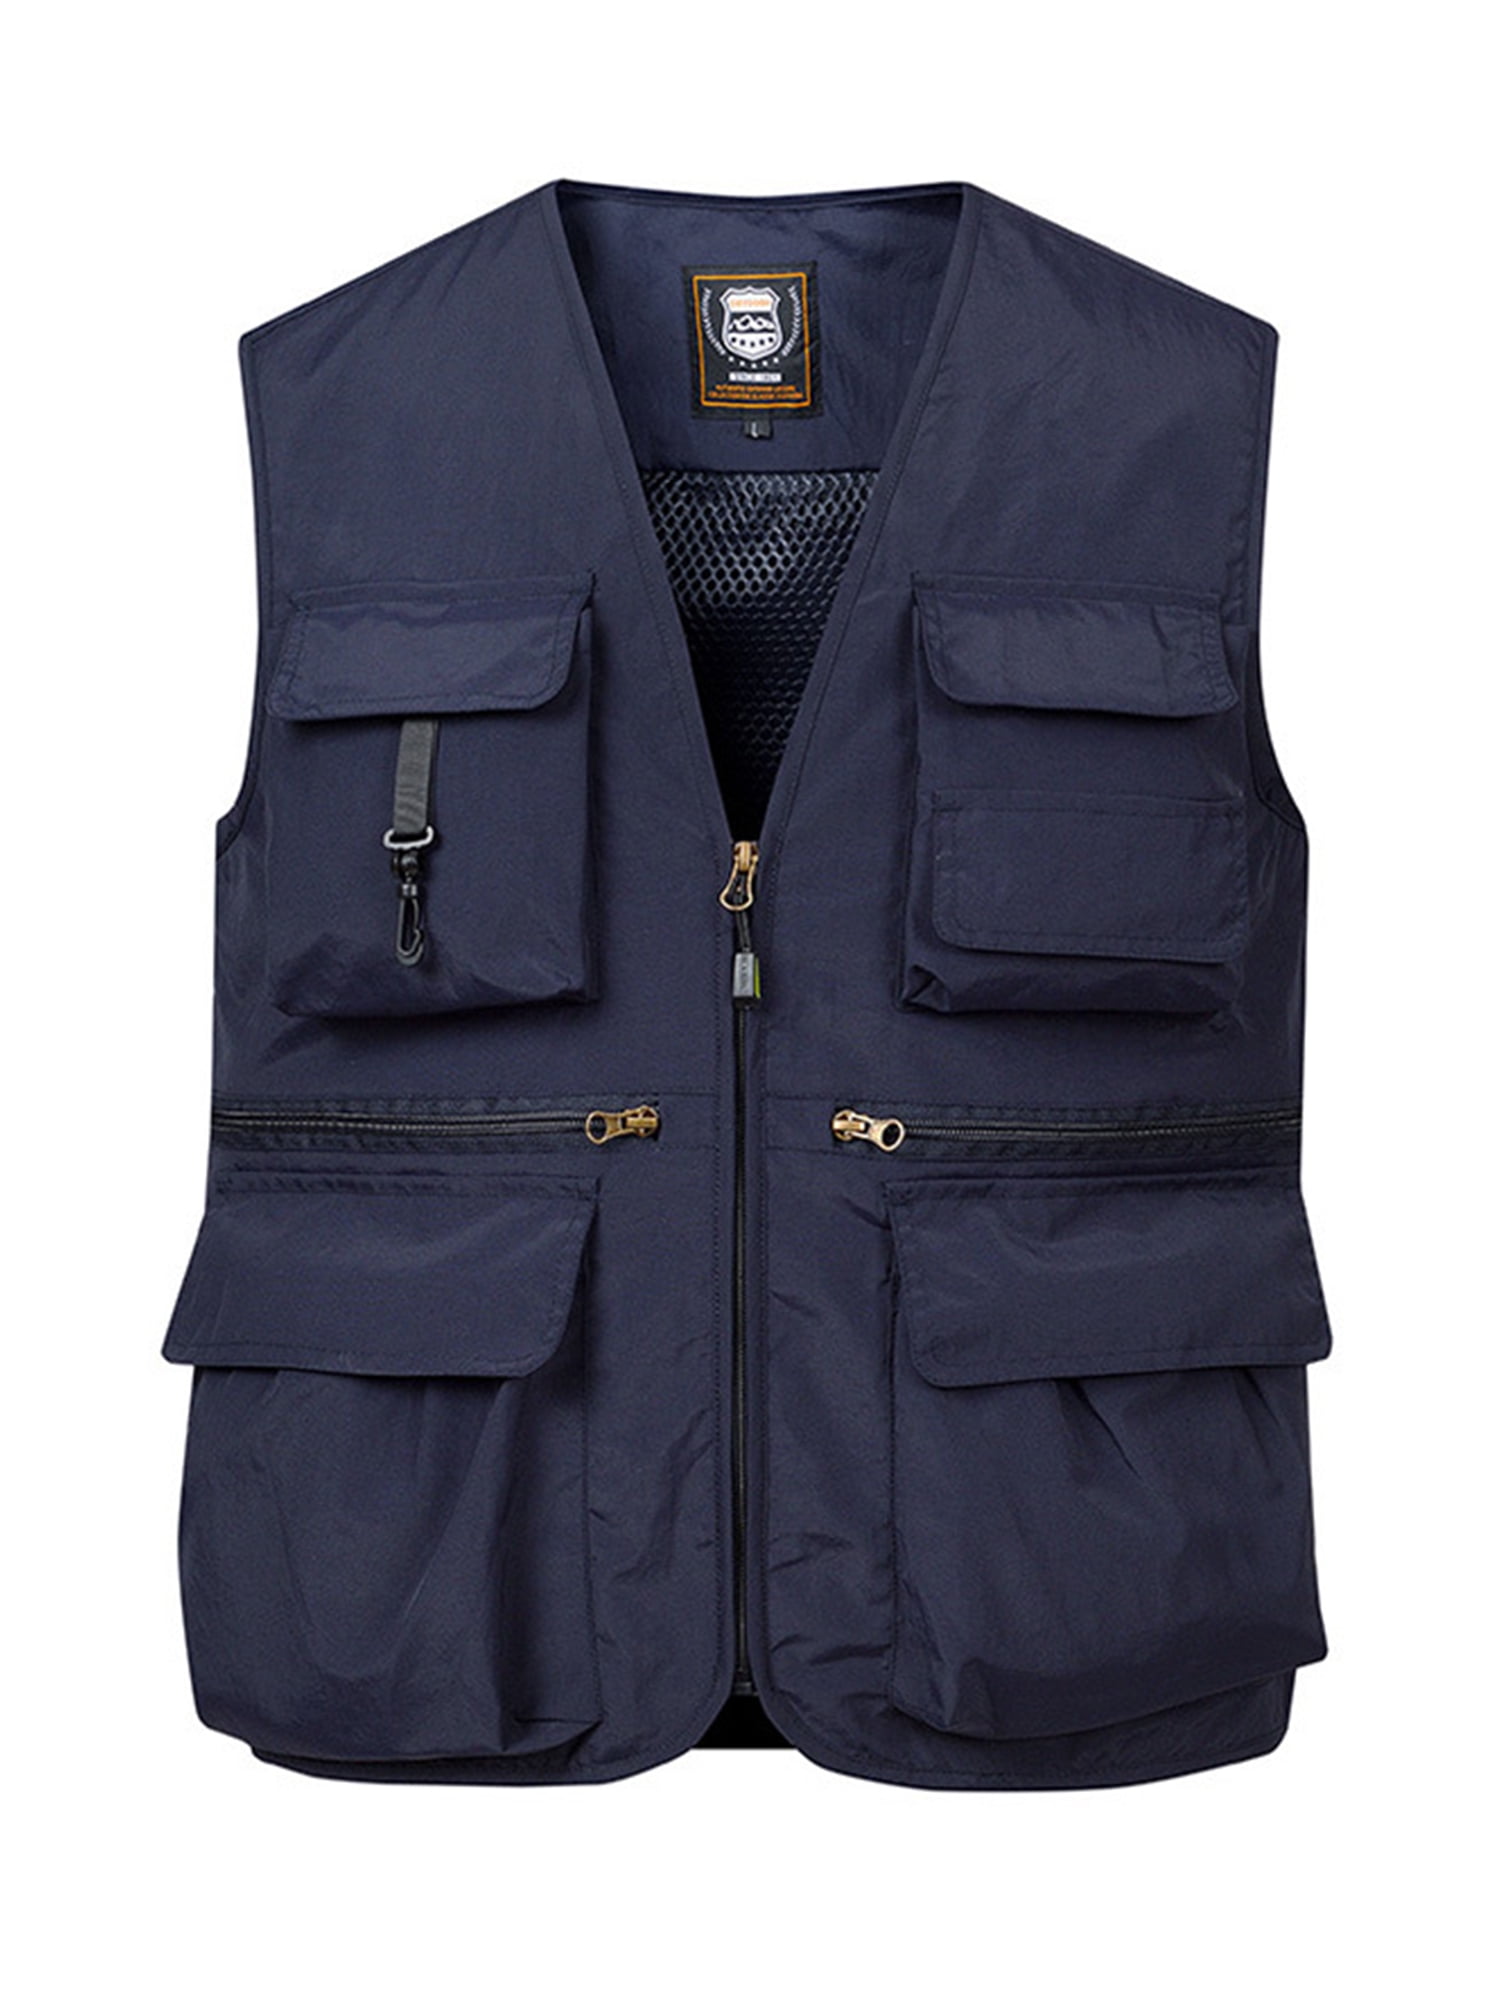 Big Size Fishing Vest Male With Many Pockets Men Sleeveless Jacket Blue  Waistcoat Work Vests Outdoors Vest Plus Large Size 10XL